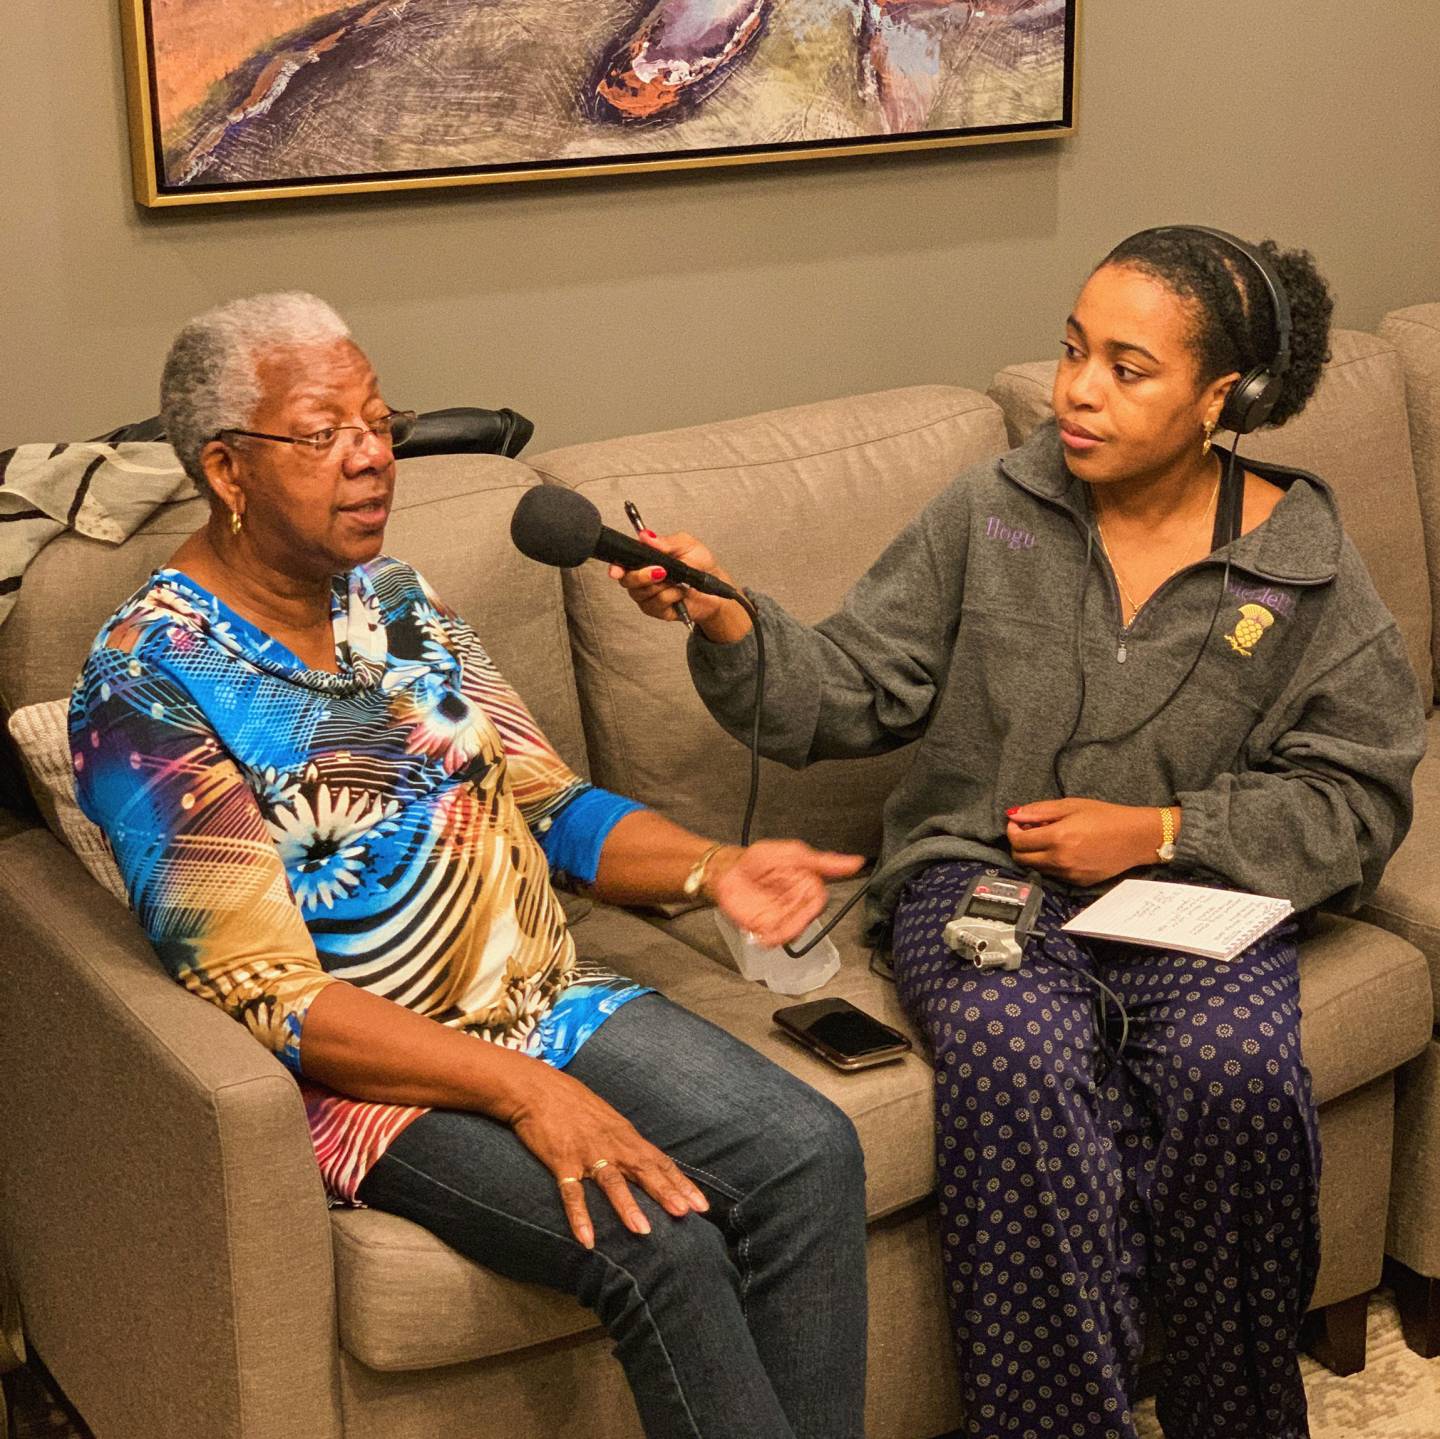 A student interviews a woman on a tan sofa